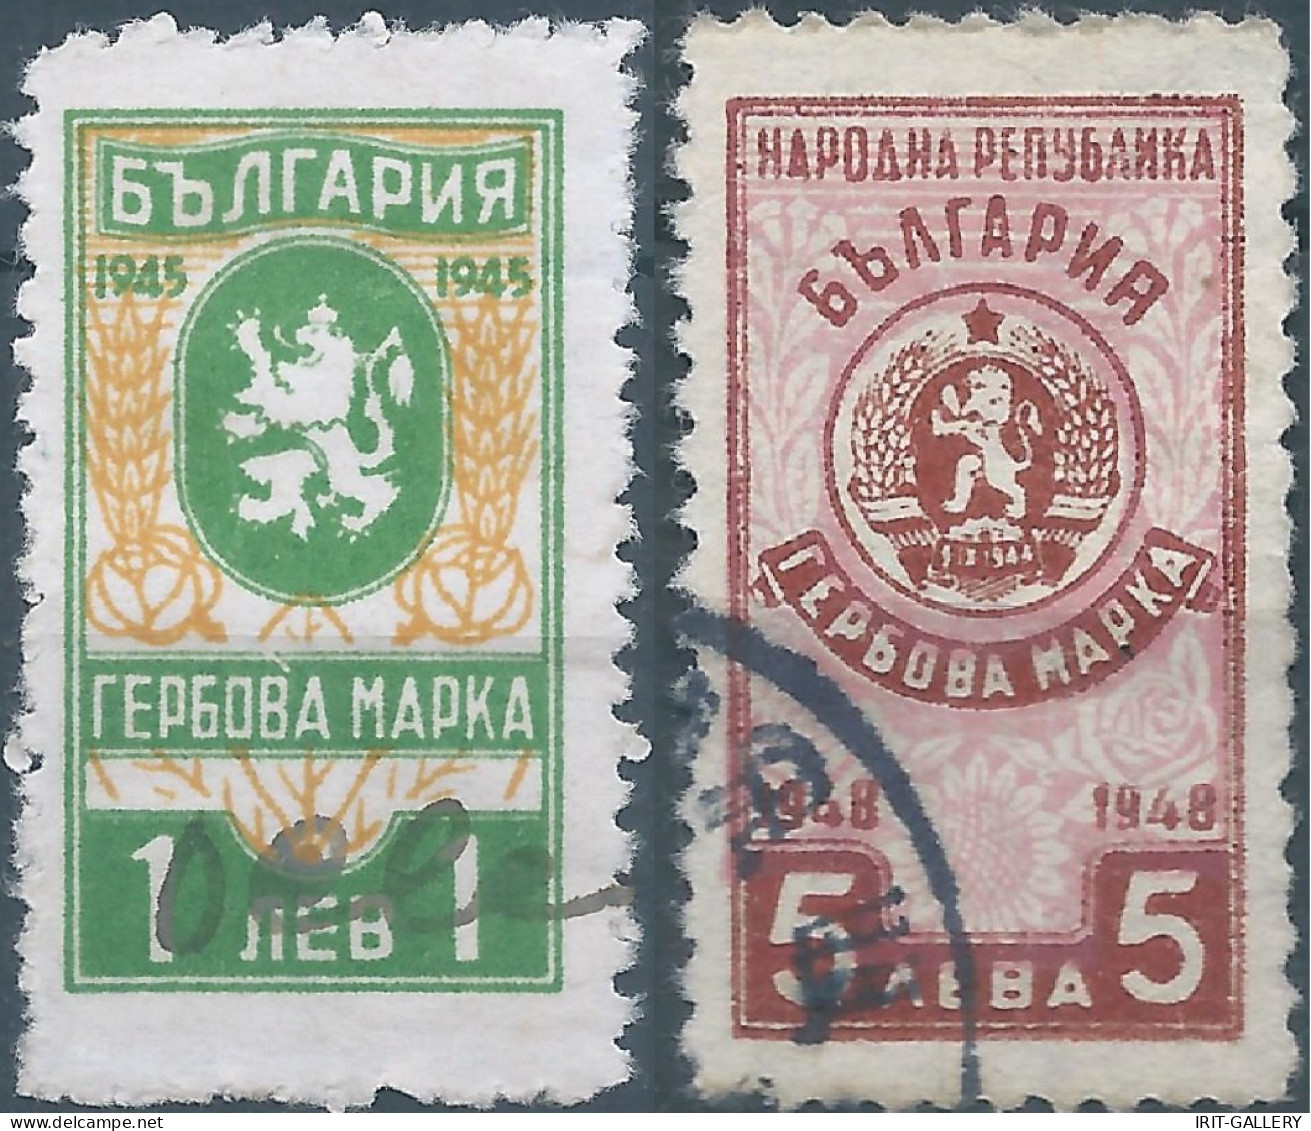 Bulgaria - Bulgarien - Bulgare,1945 - 1948 Revenue Stamps Fiscal Tax,Obliterated - Dienstmarken